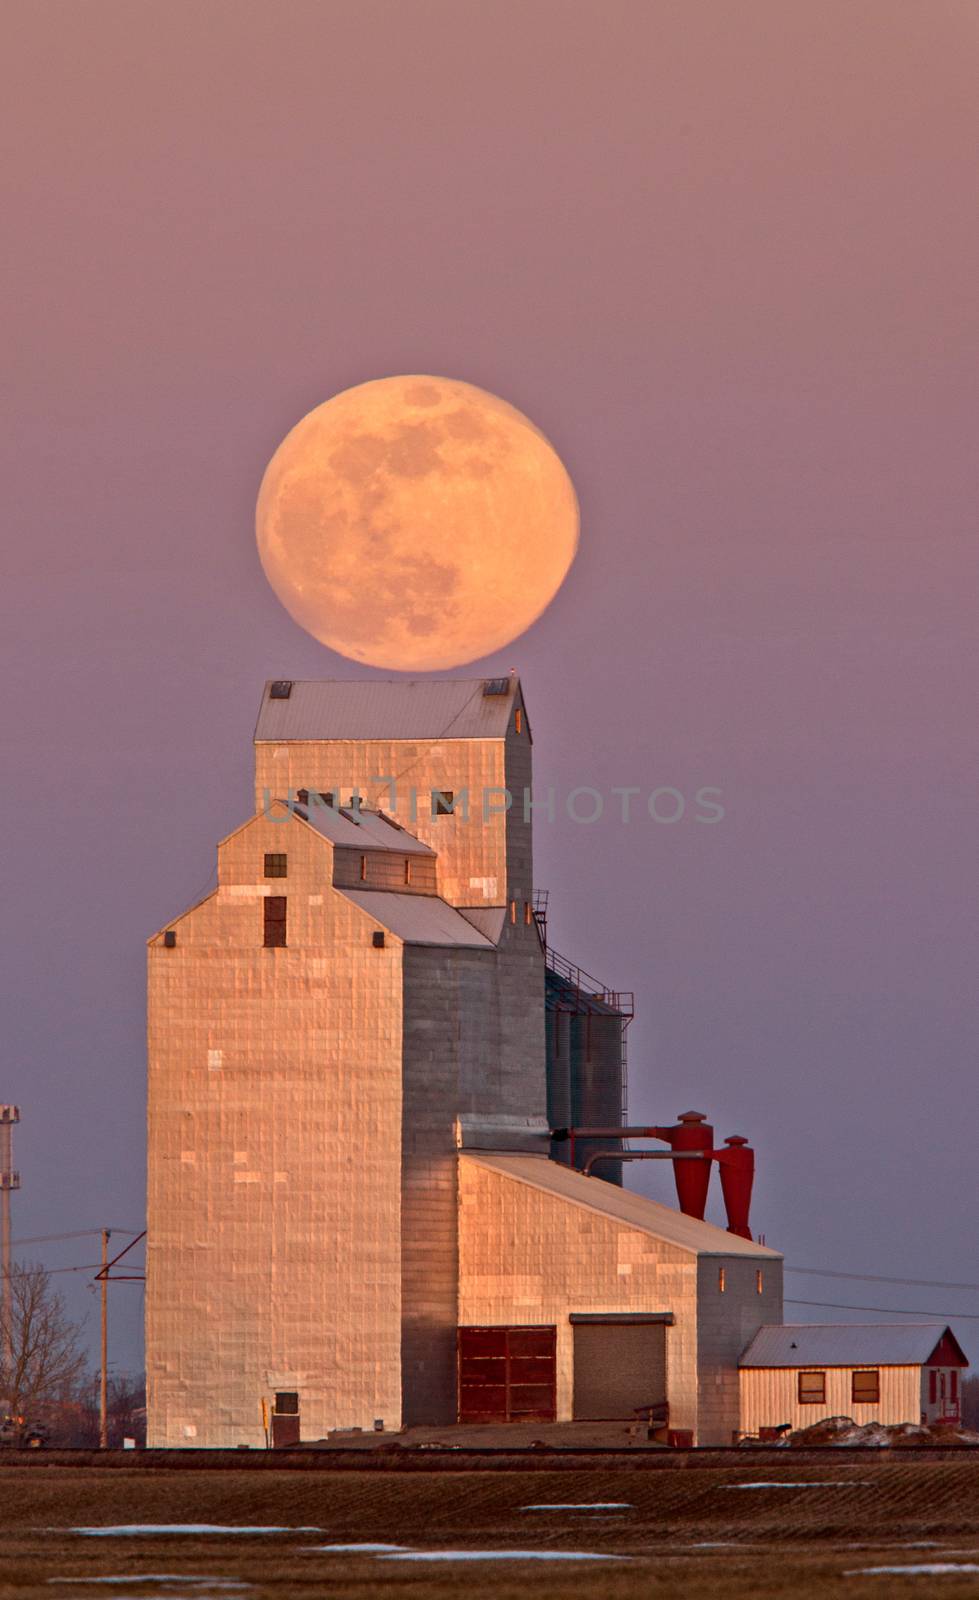 Grain Elevator Full Moon by pictureguy